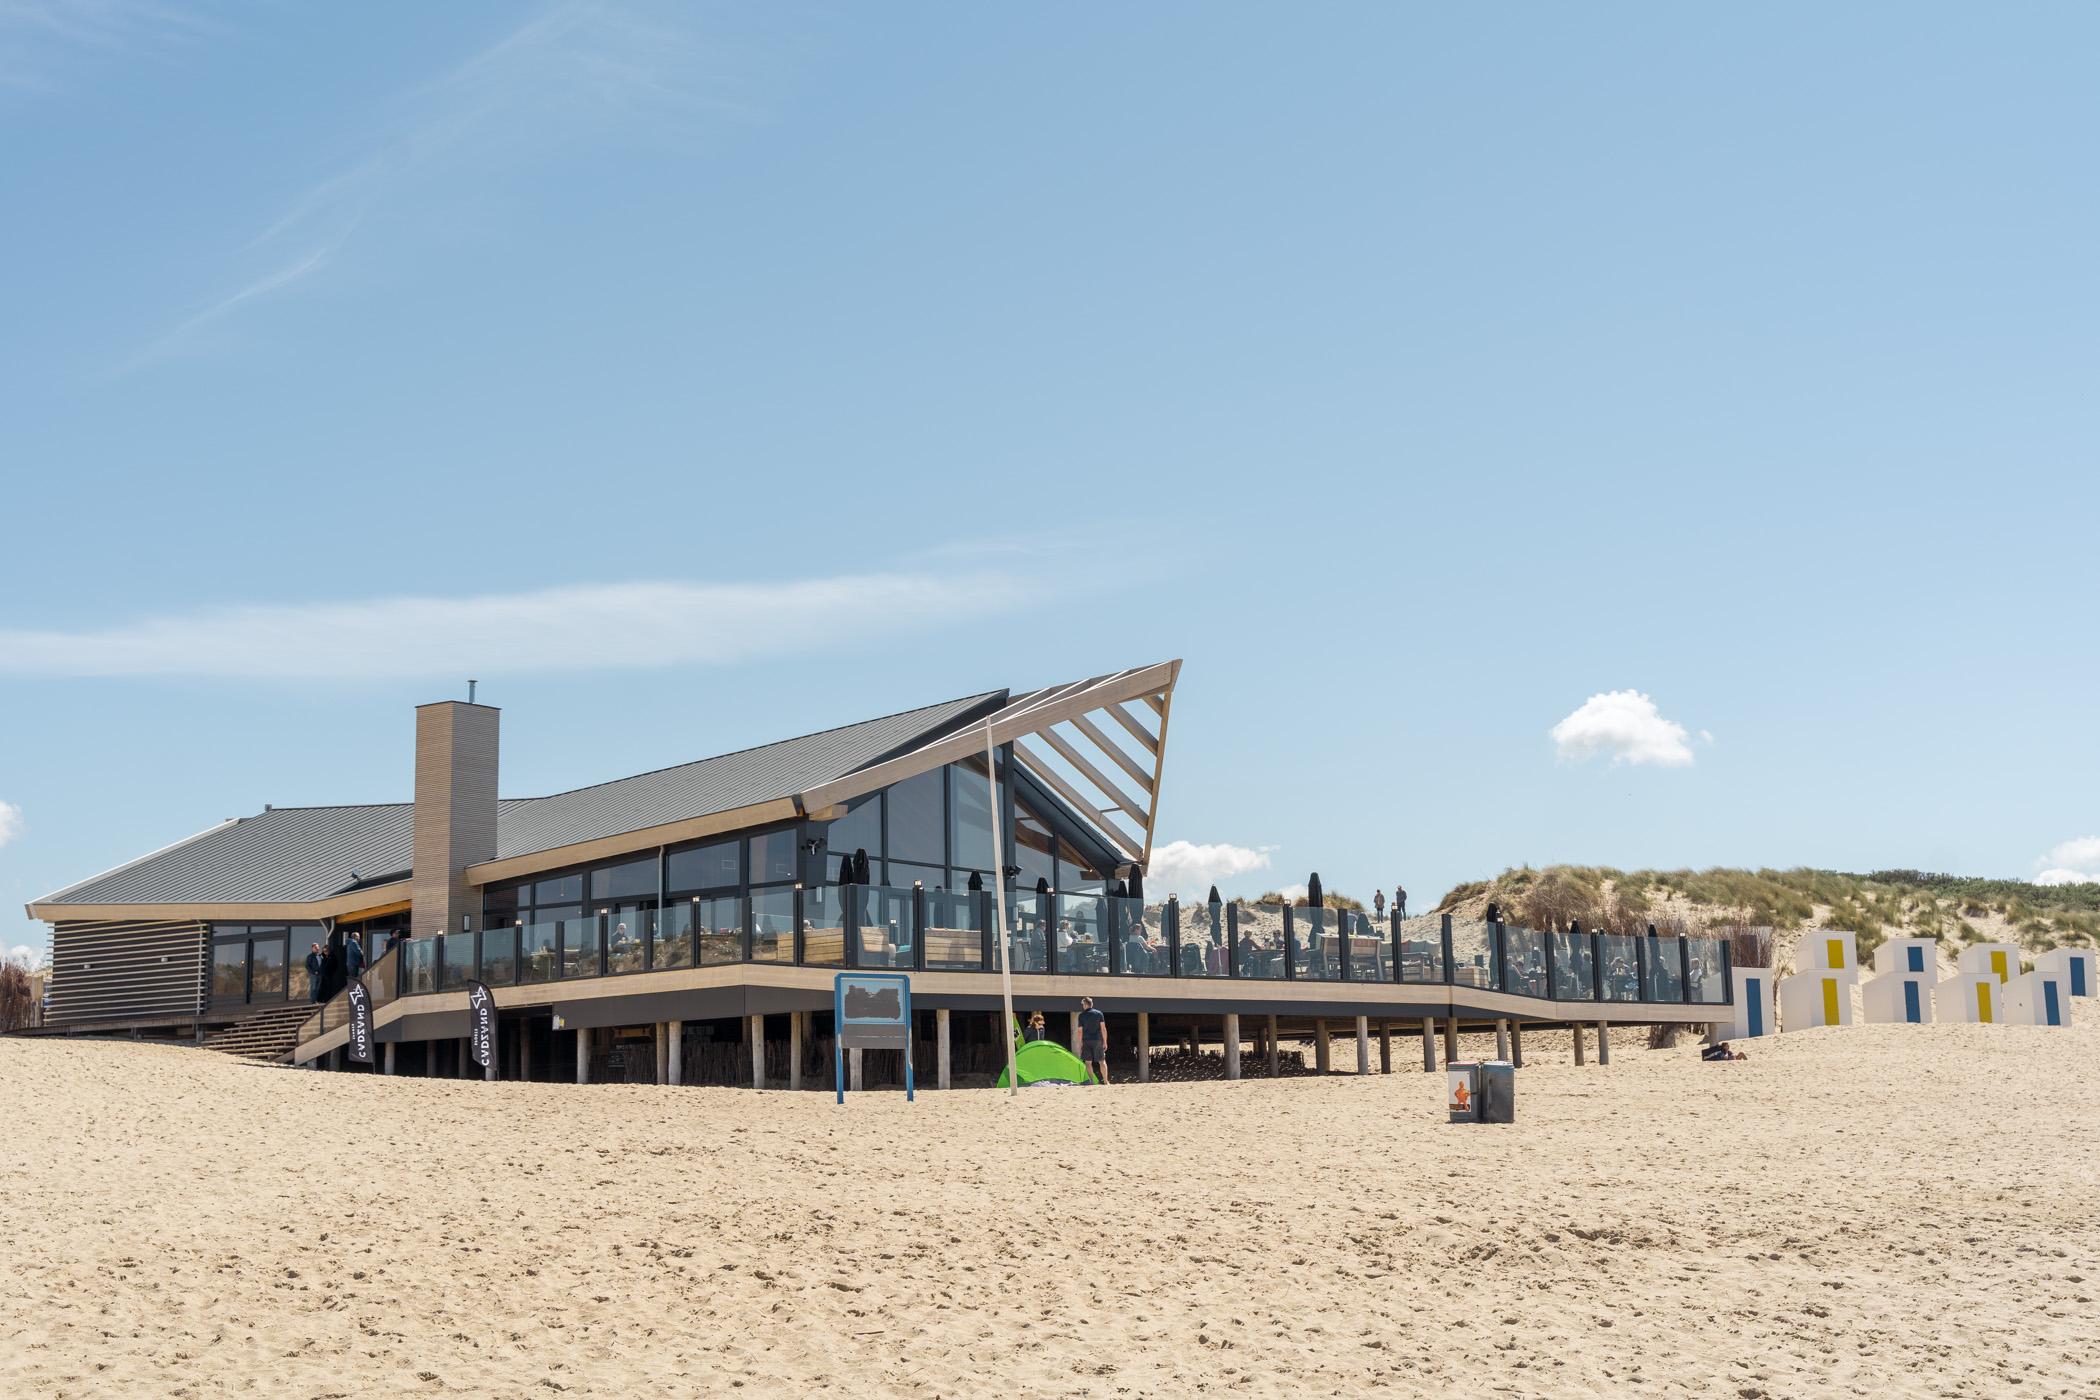 Cadzand Strandpavillon de Zeemeeuw